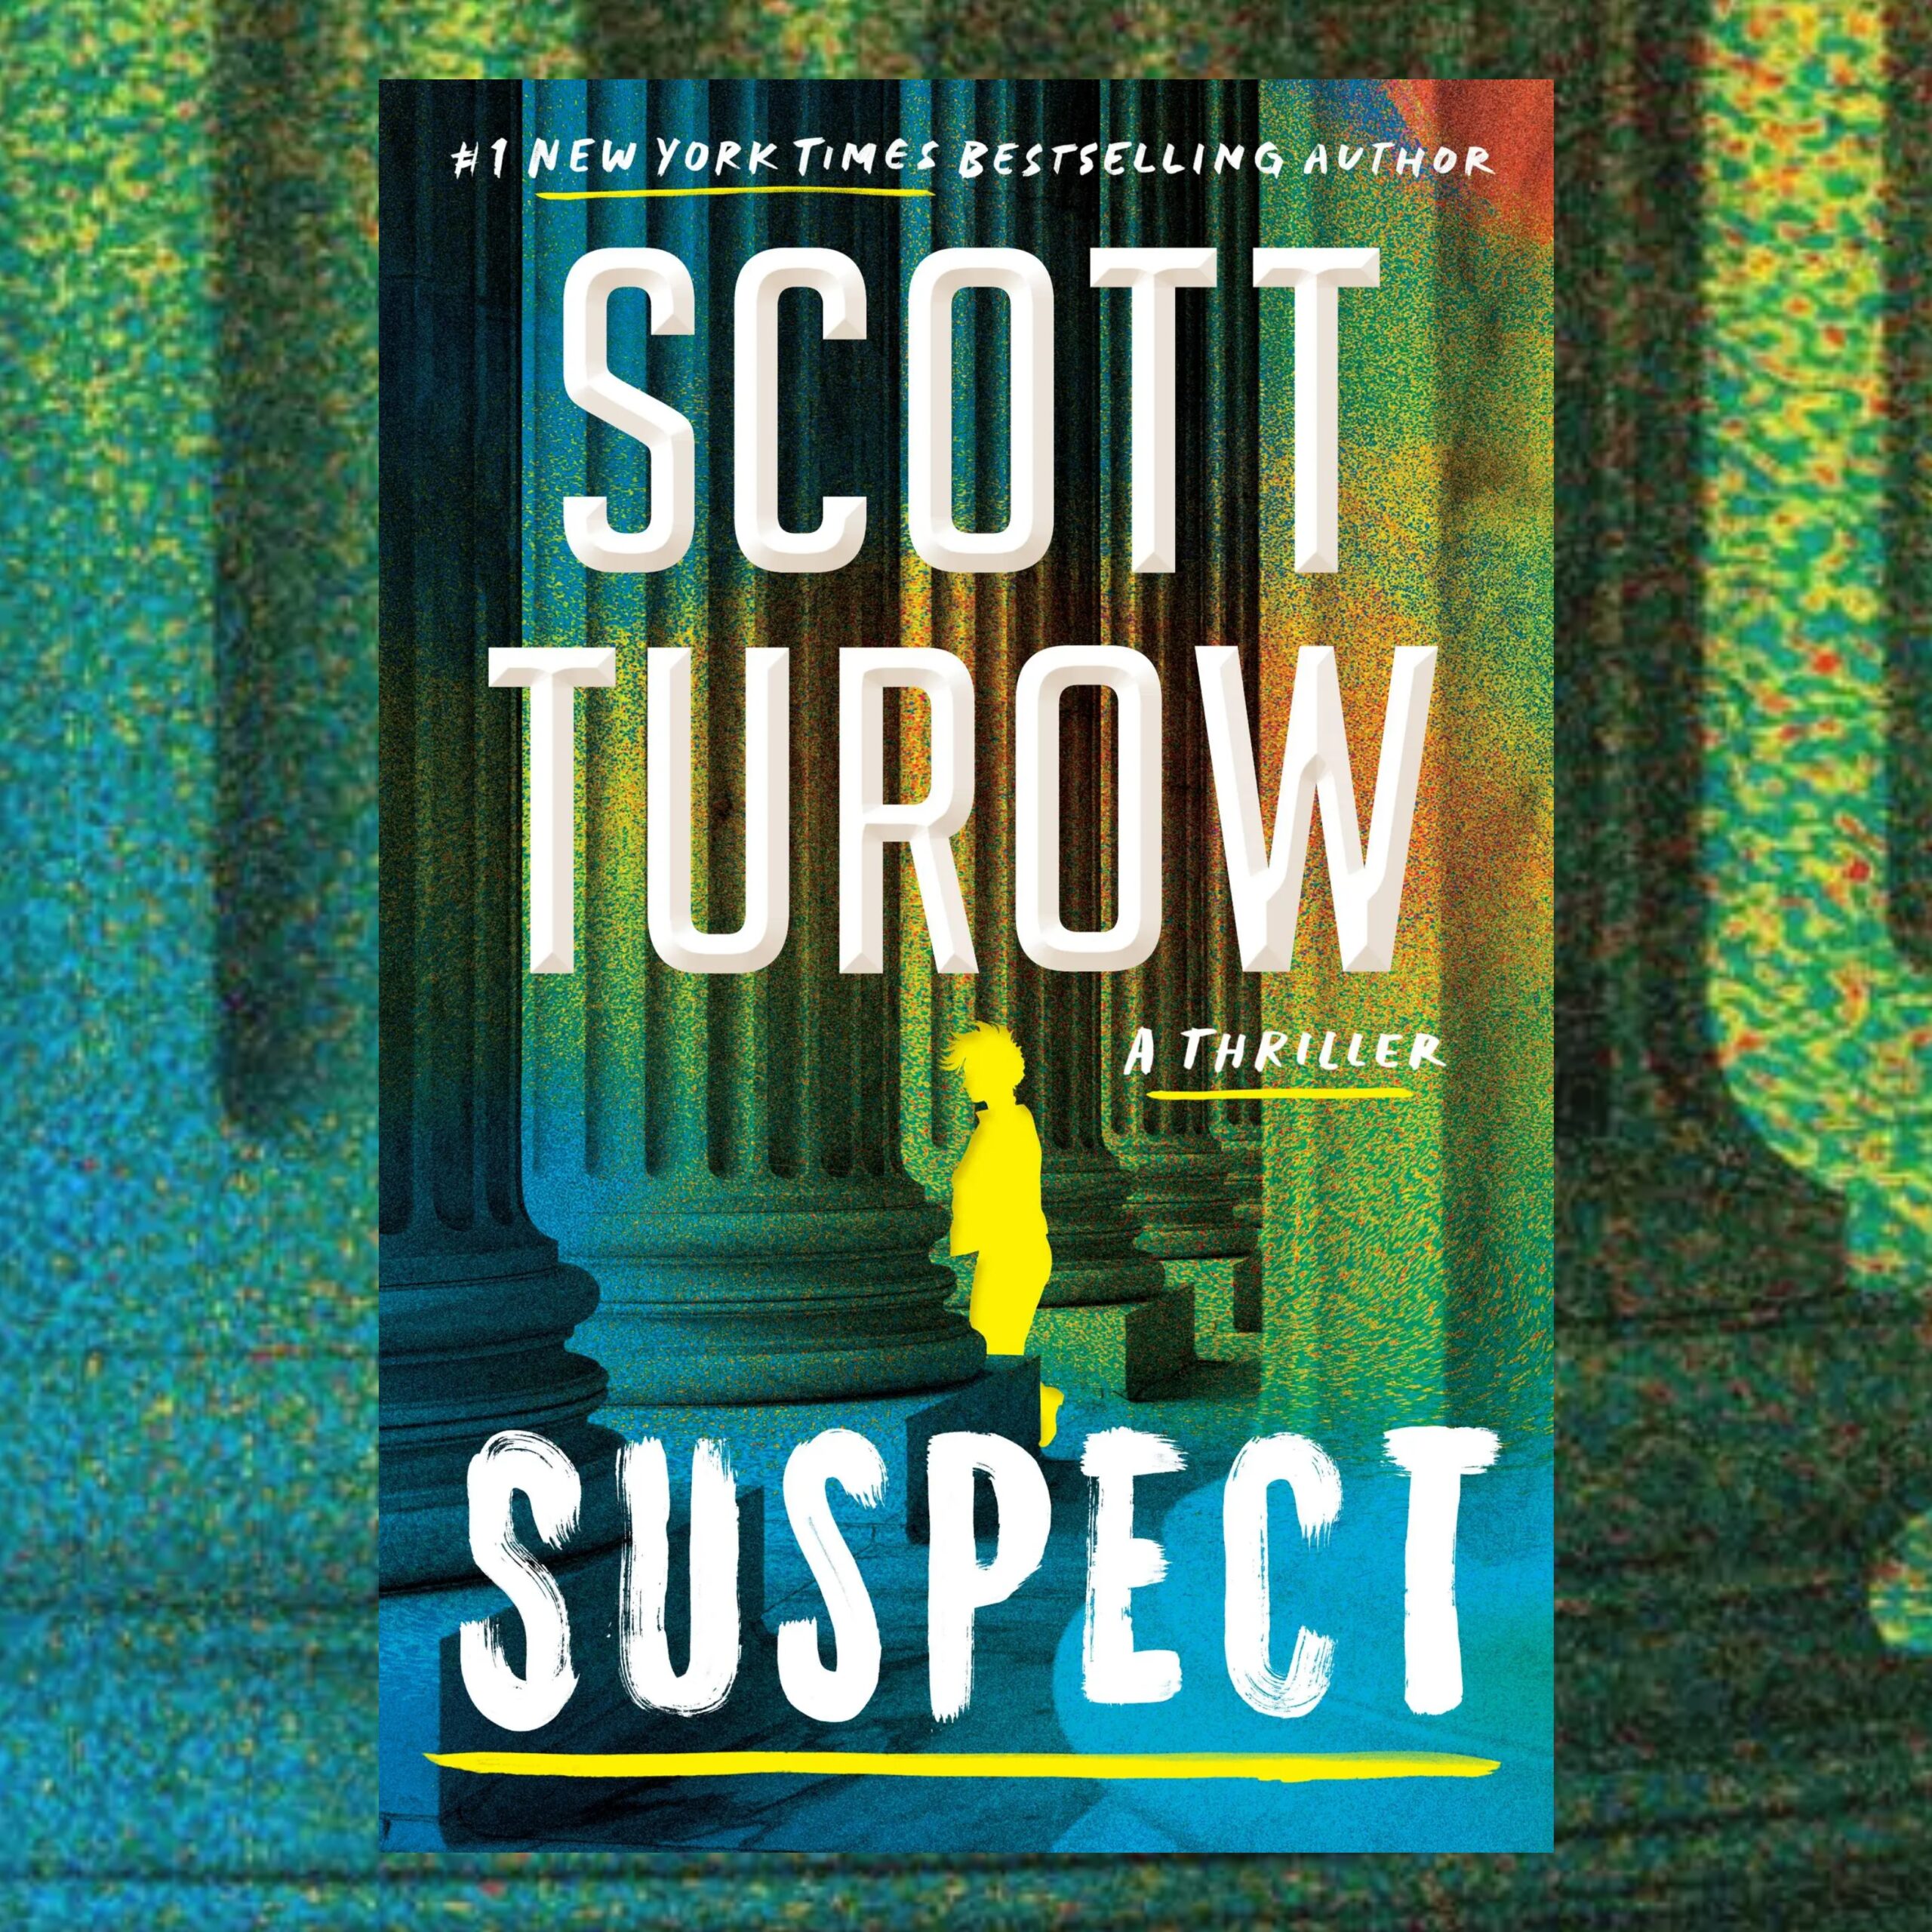 1807 - Scott Turow - Suspect | The Book Show